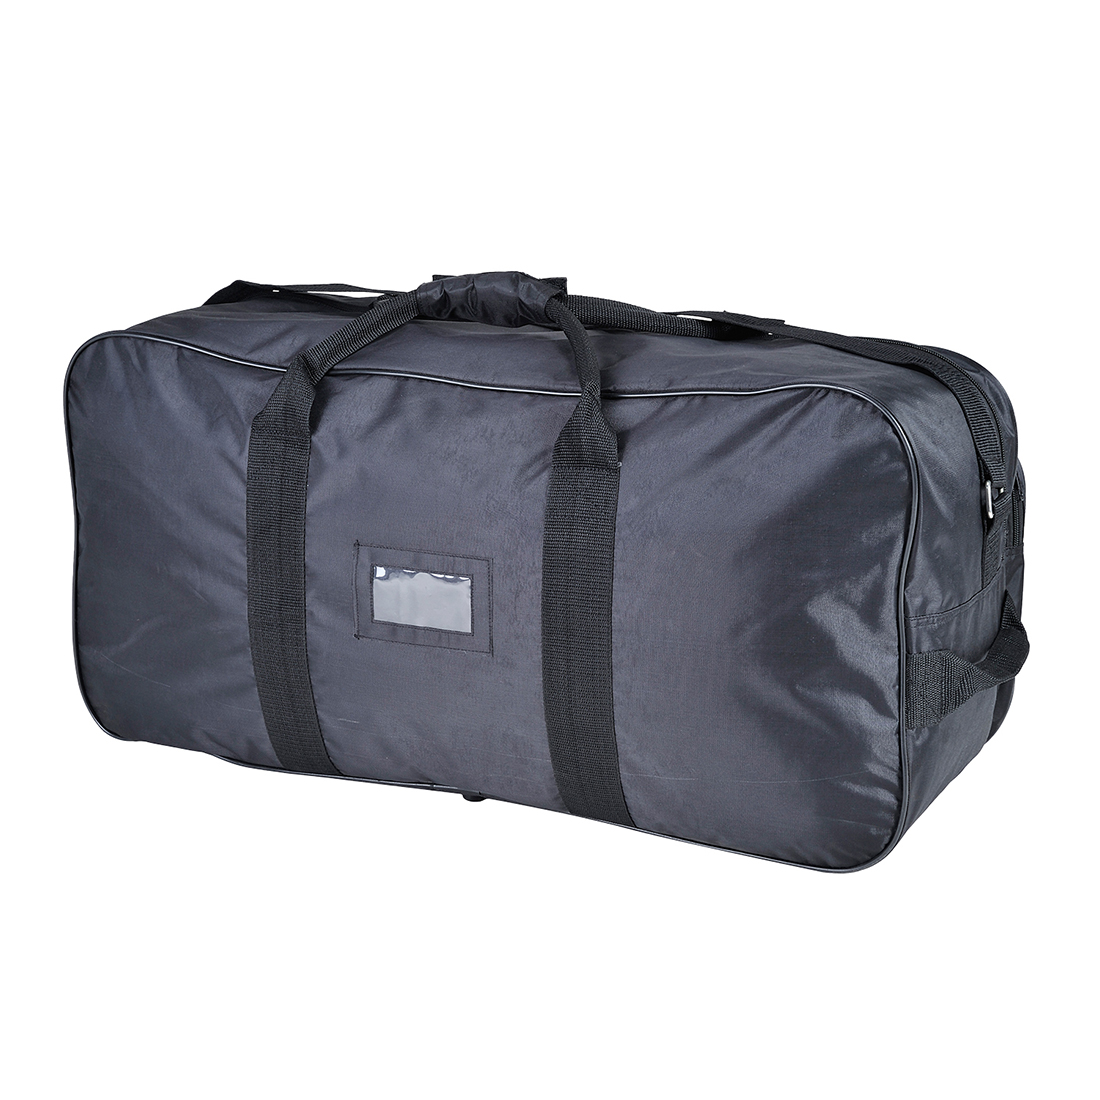 Holdall Bag  (65L)